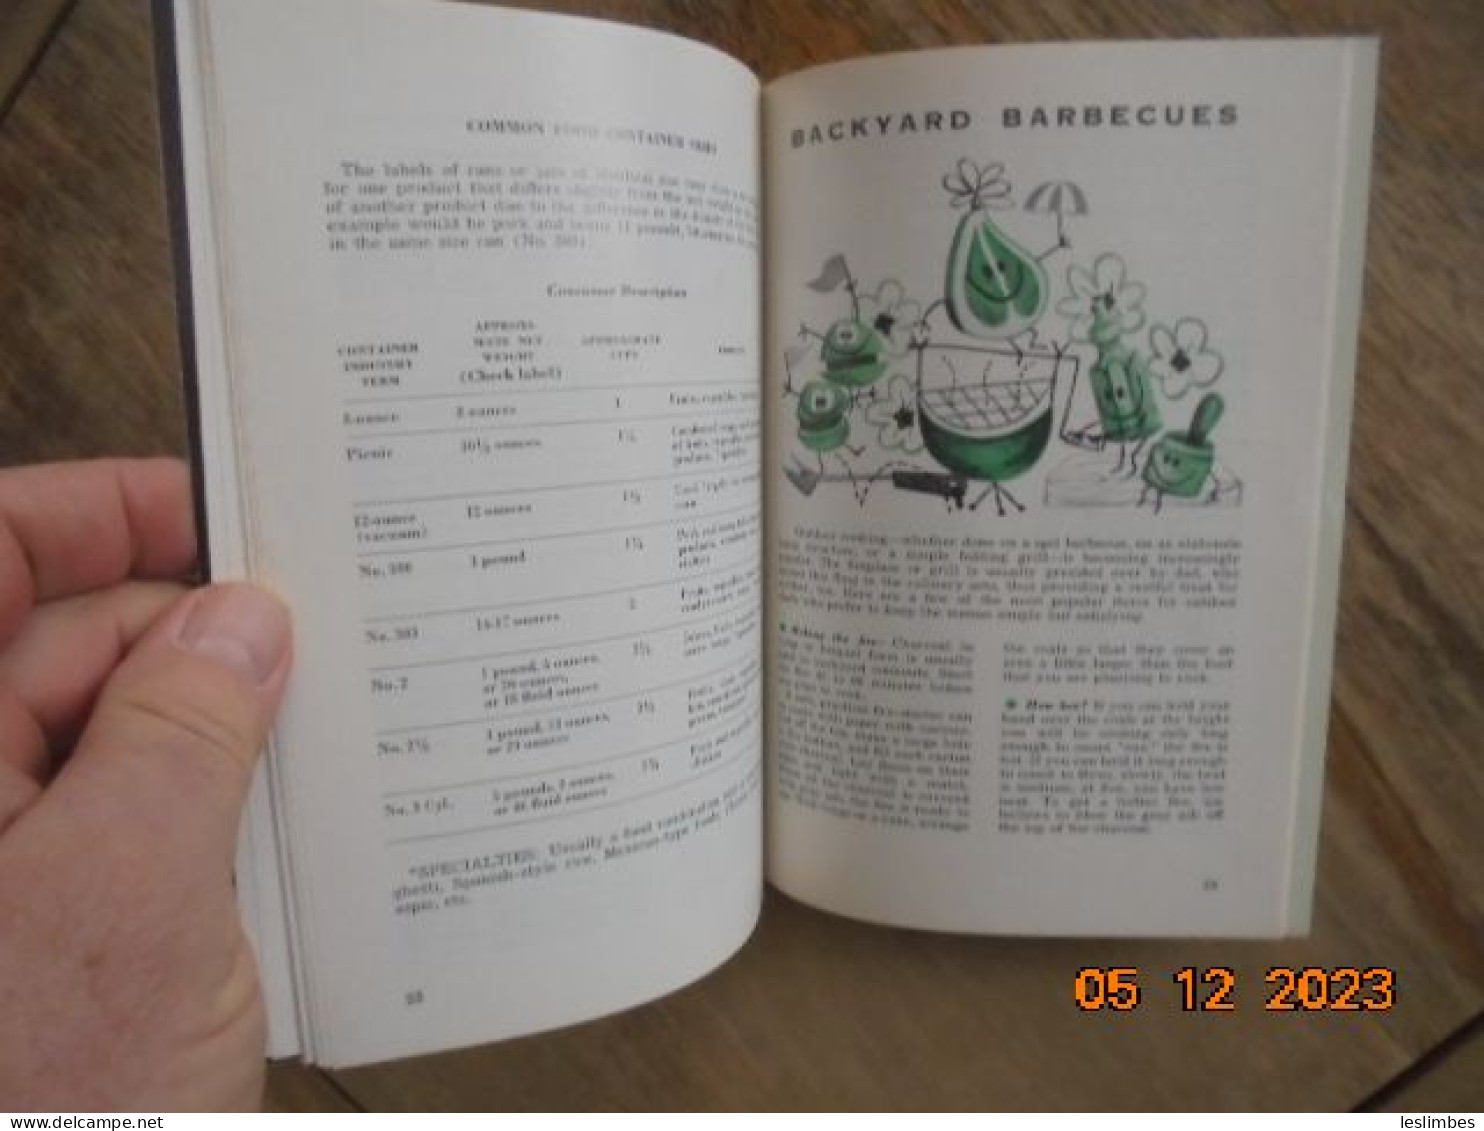 Metropolitan Cook Book [February 1964 Edition] Metropolitan Life Insurance Company - American (US)